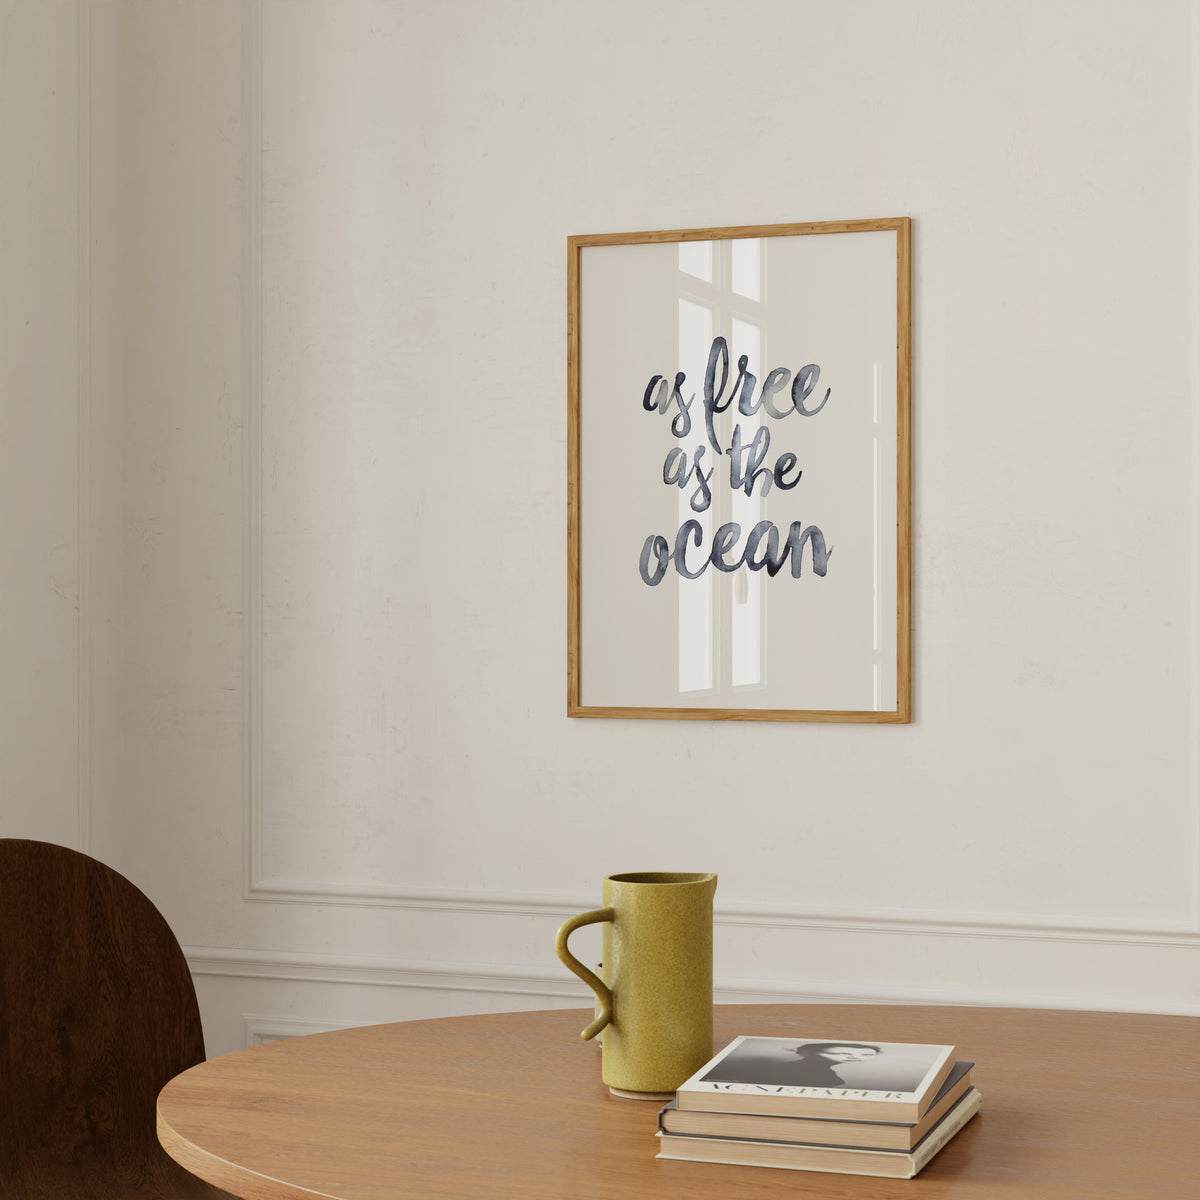 Art Print - As free as the ocean